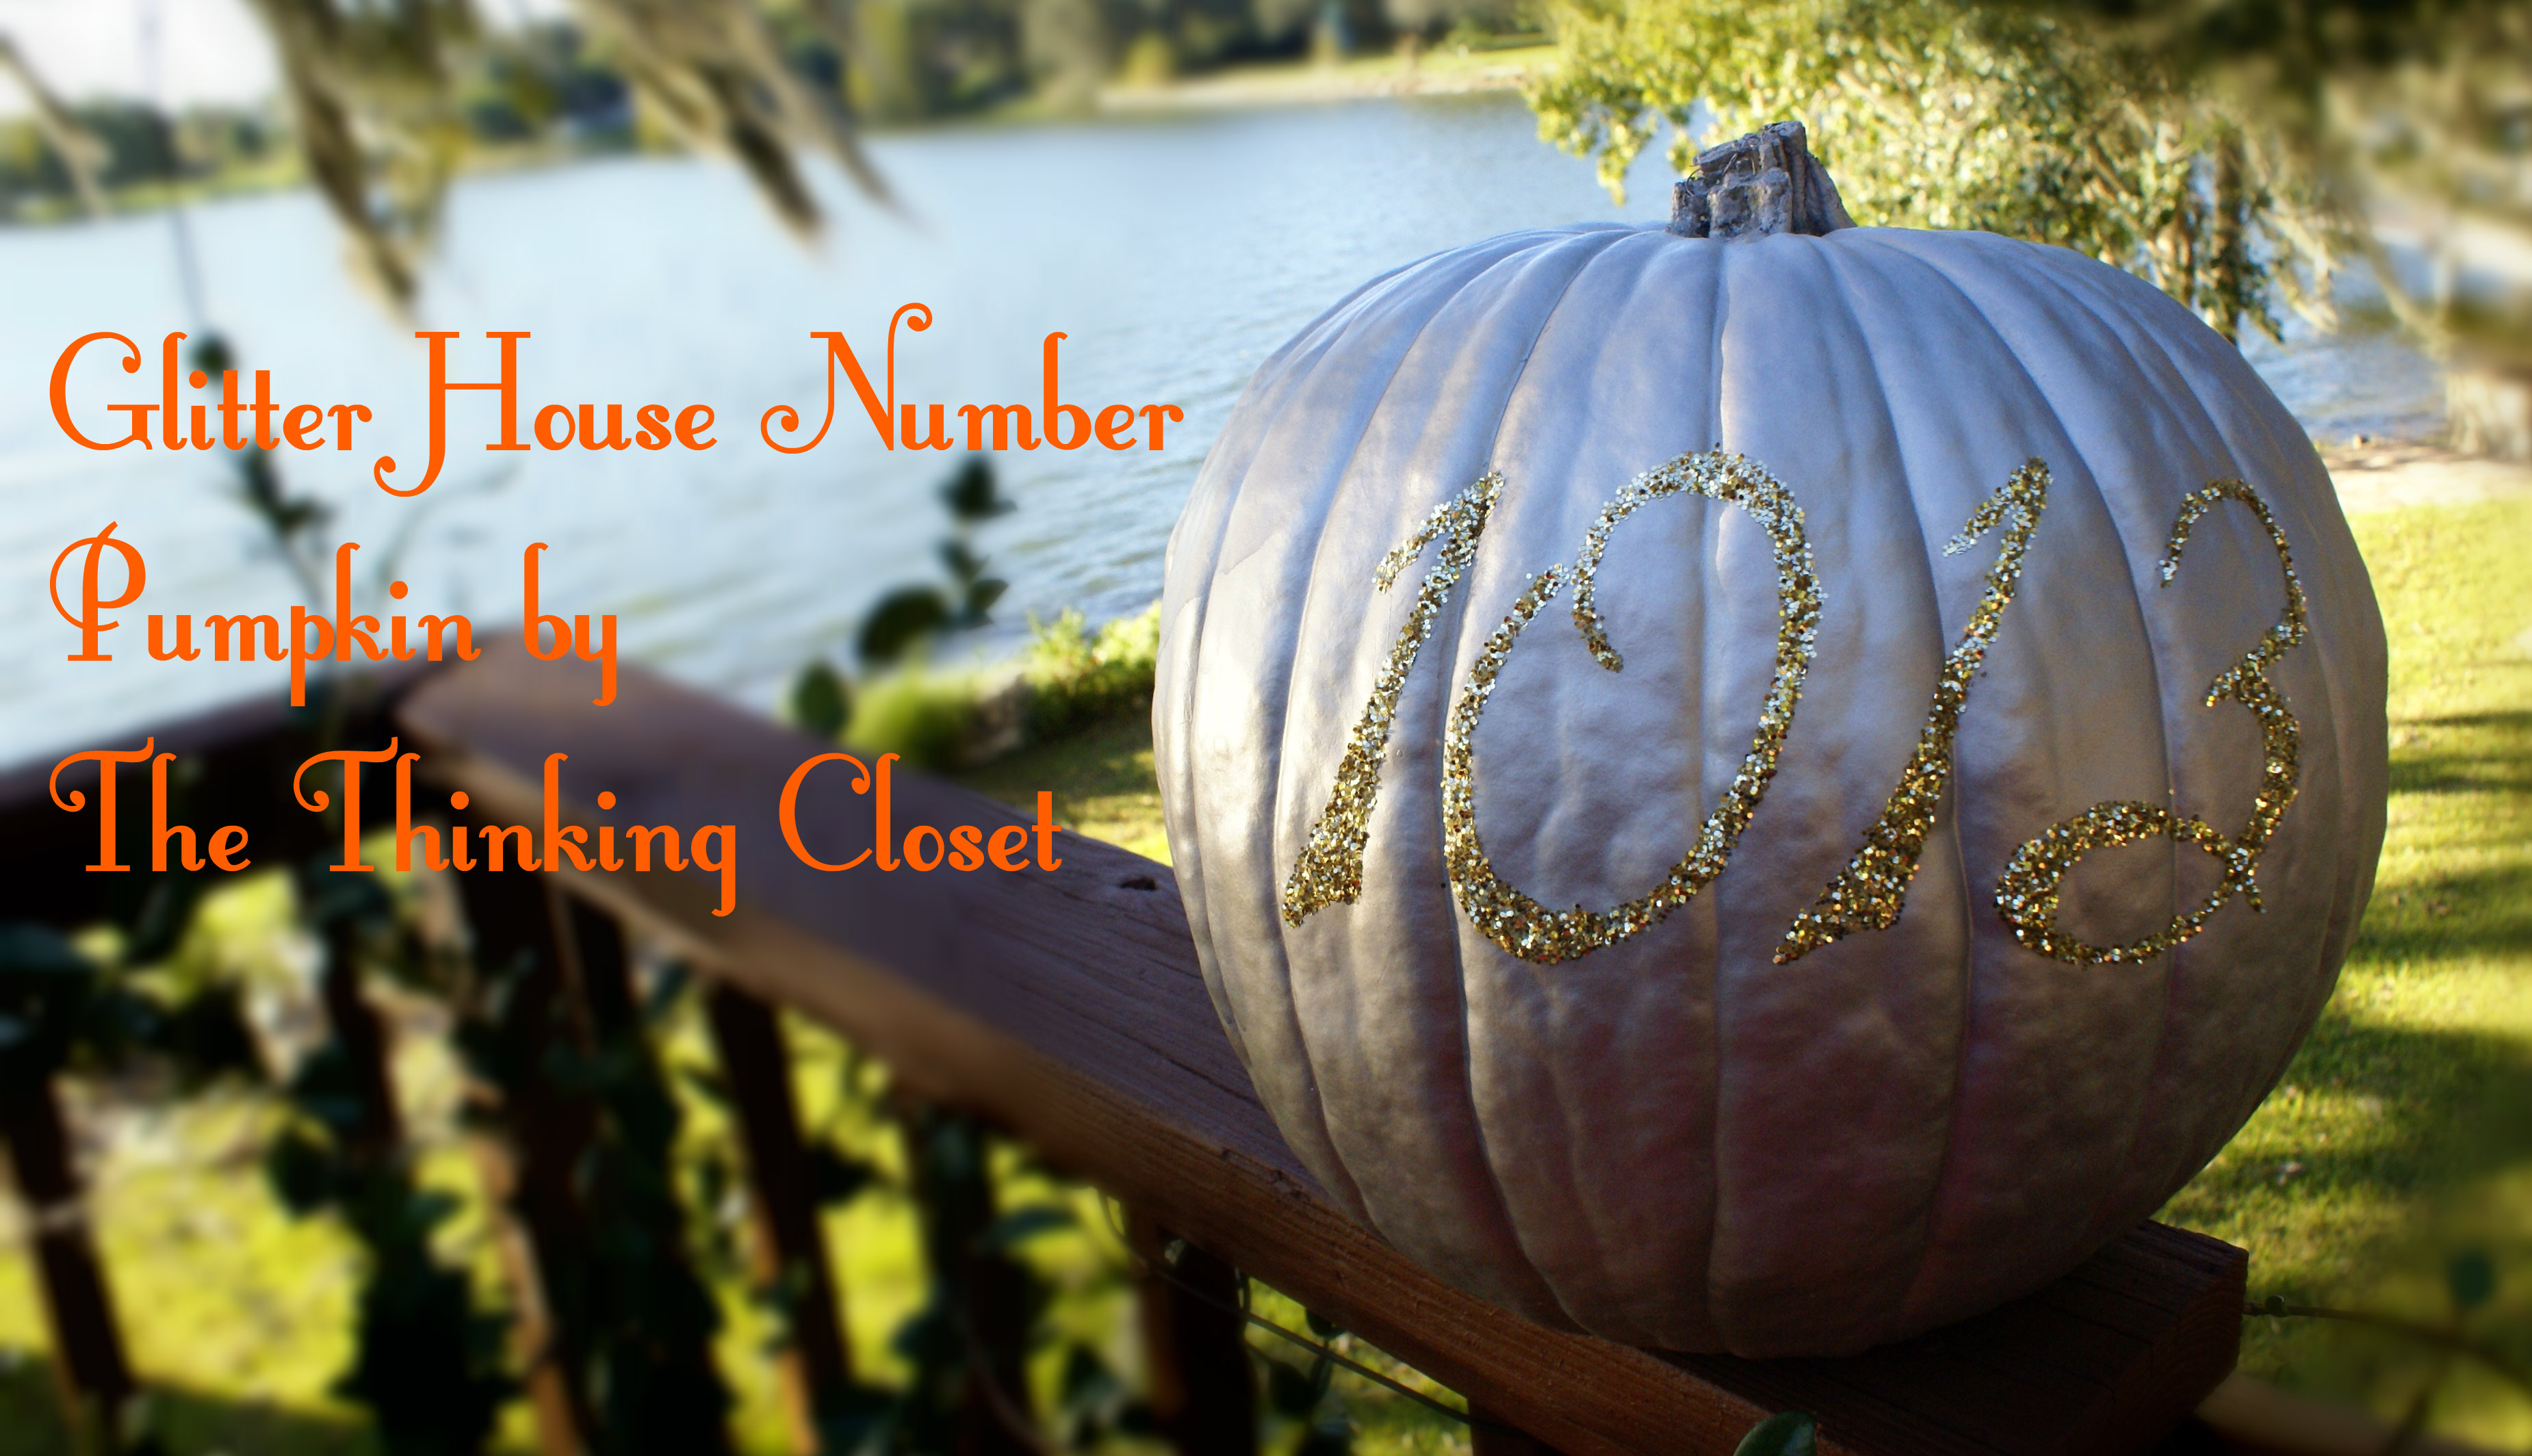 Glitter House Number Pumpkin: Fall-ify Florida Part II